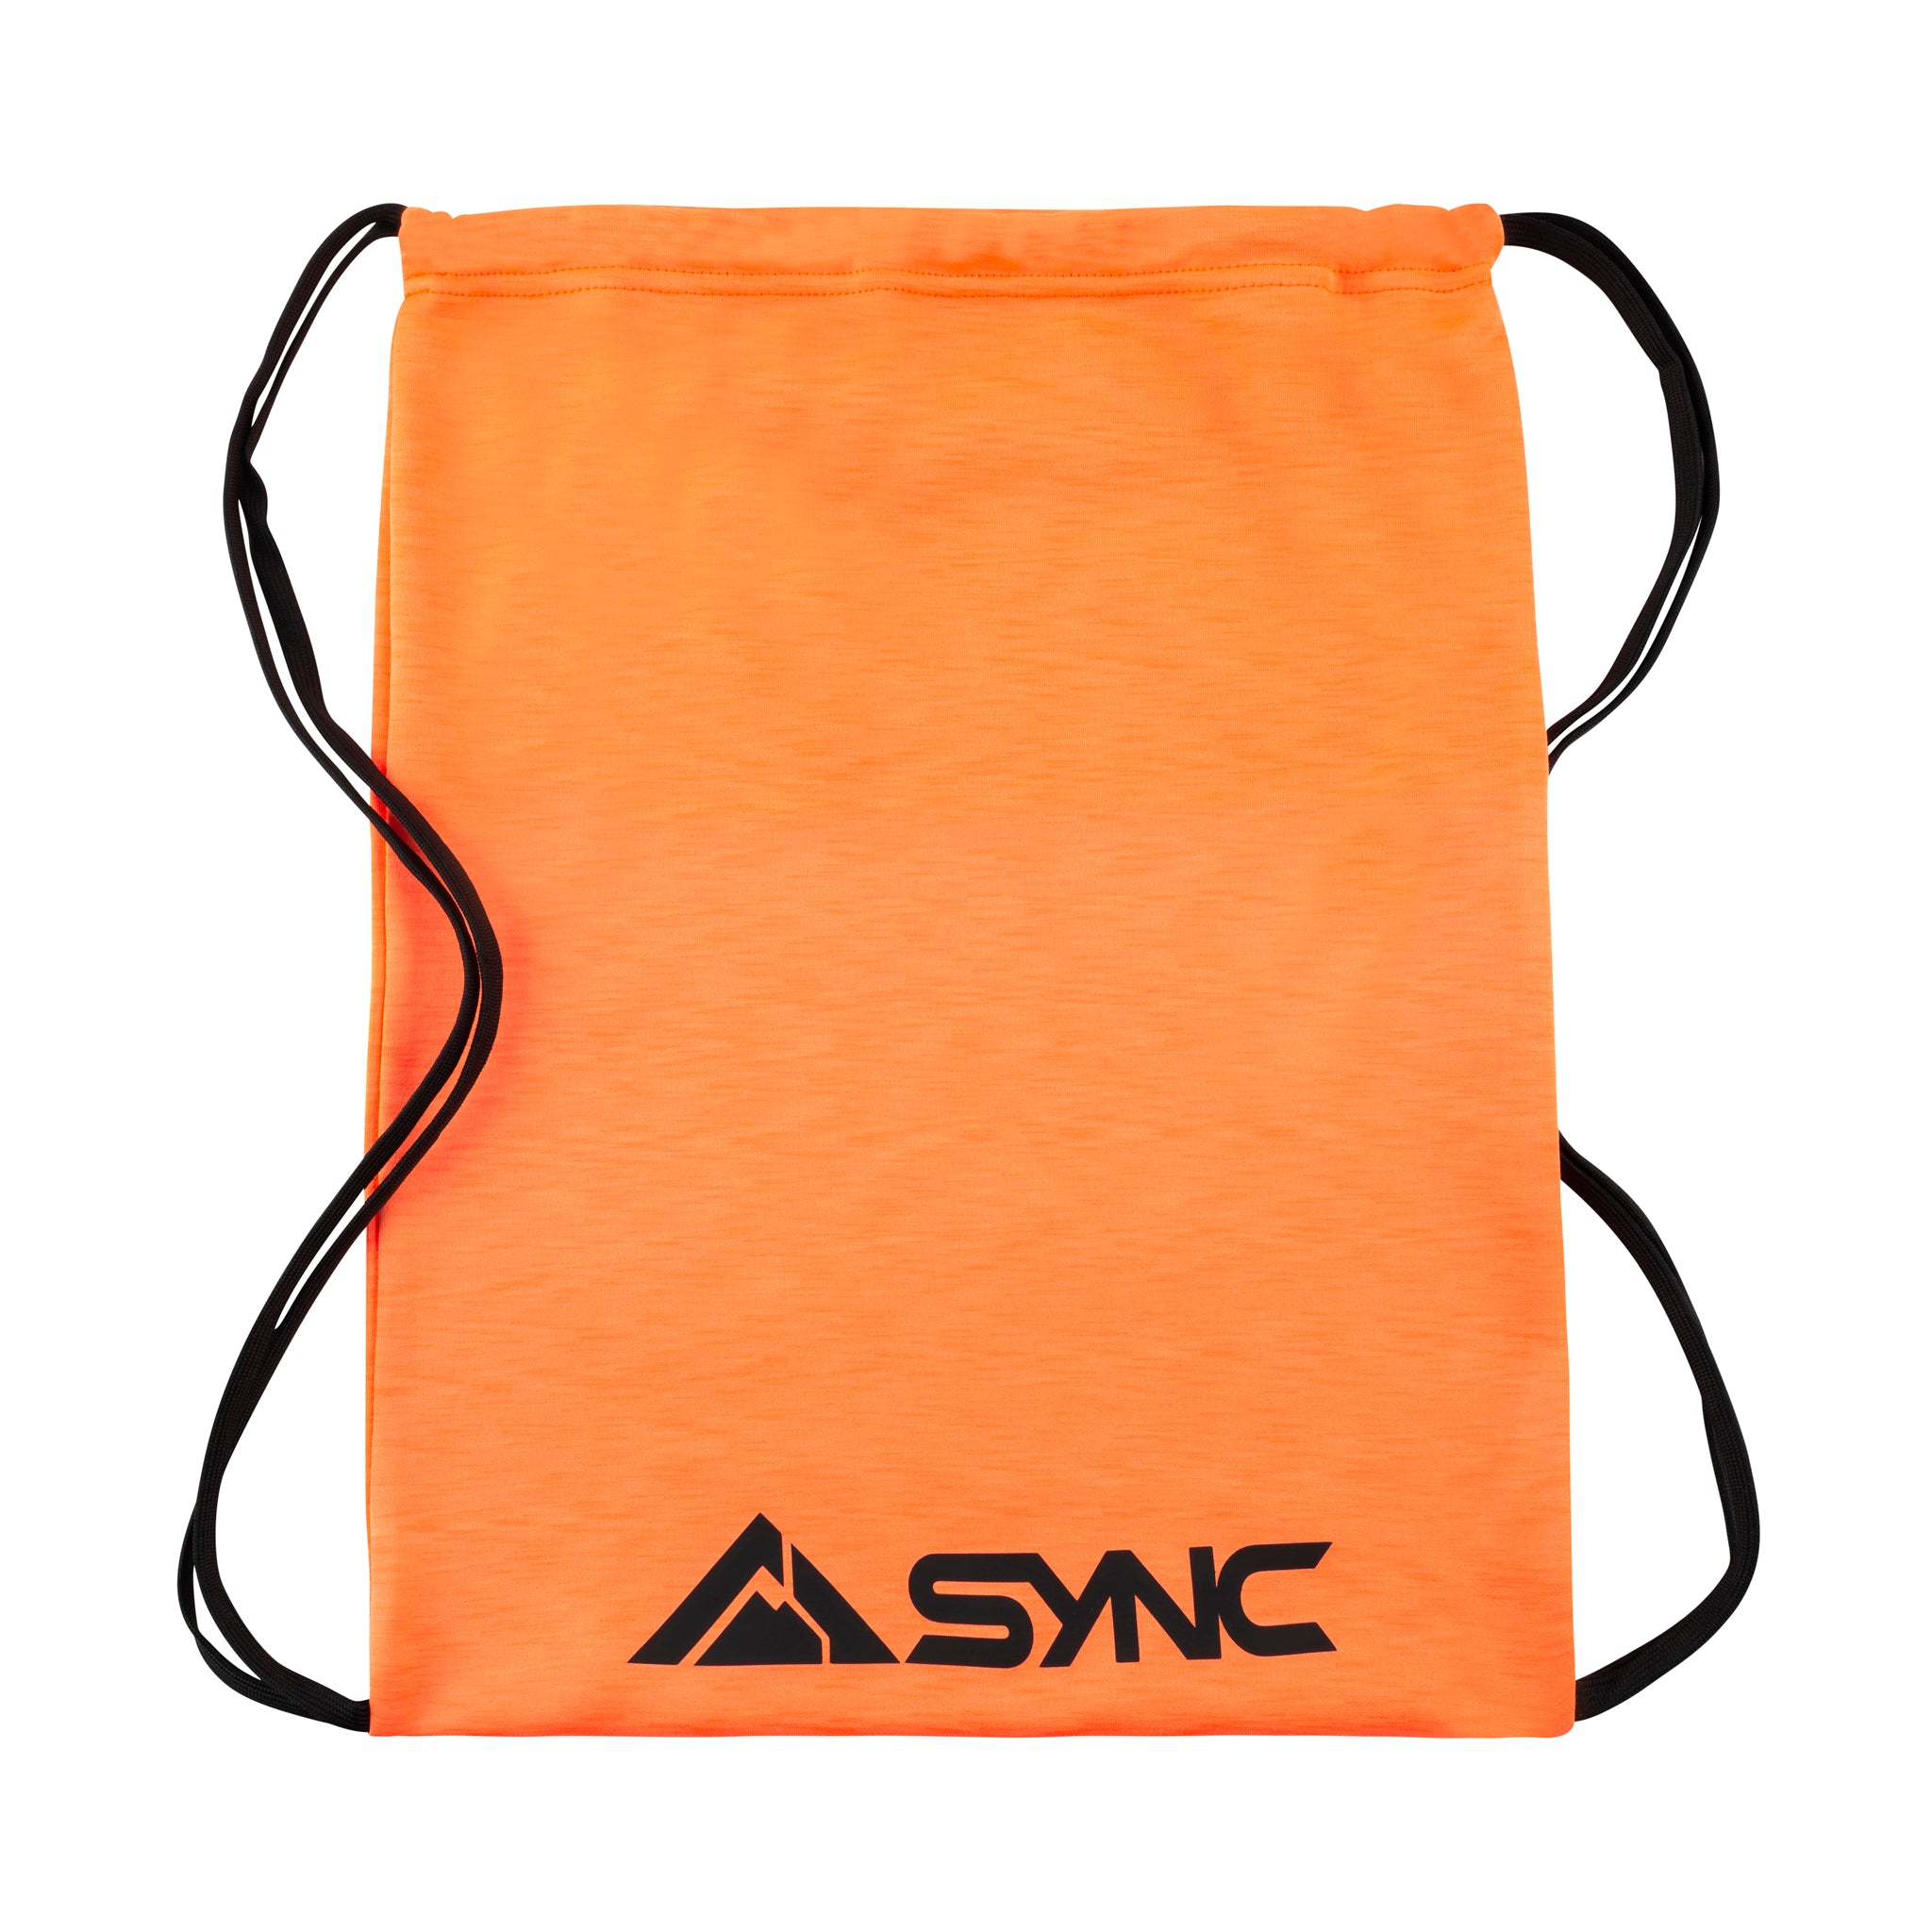 sync-performance-drawstring-bag-front-orange-front